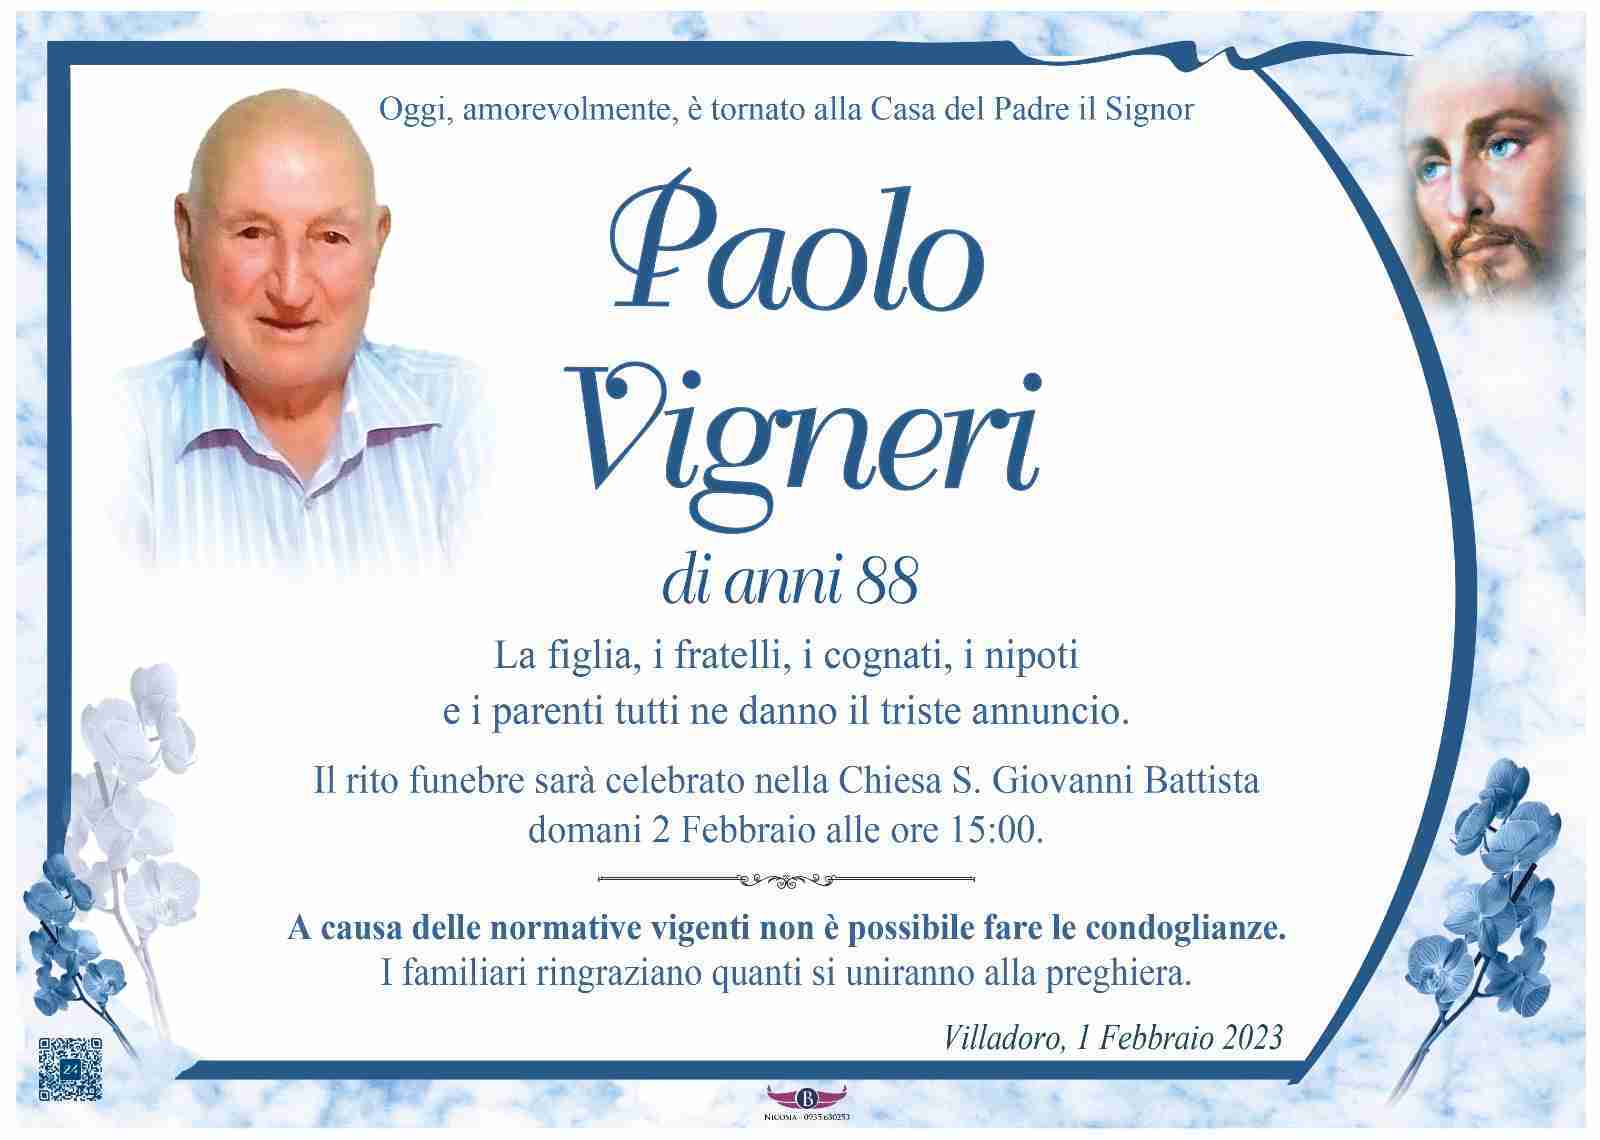 Paolo Vigneri